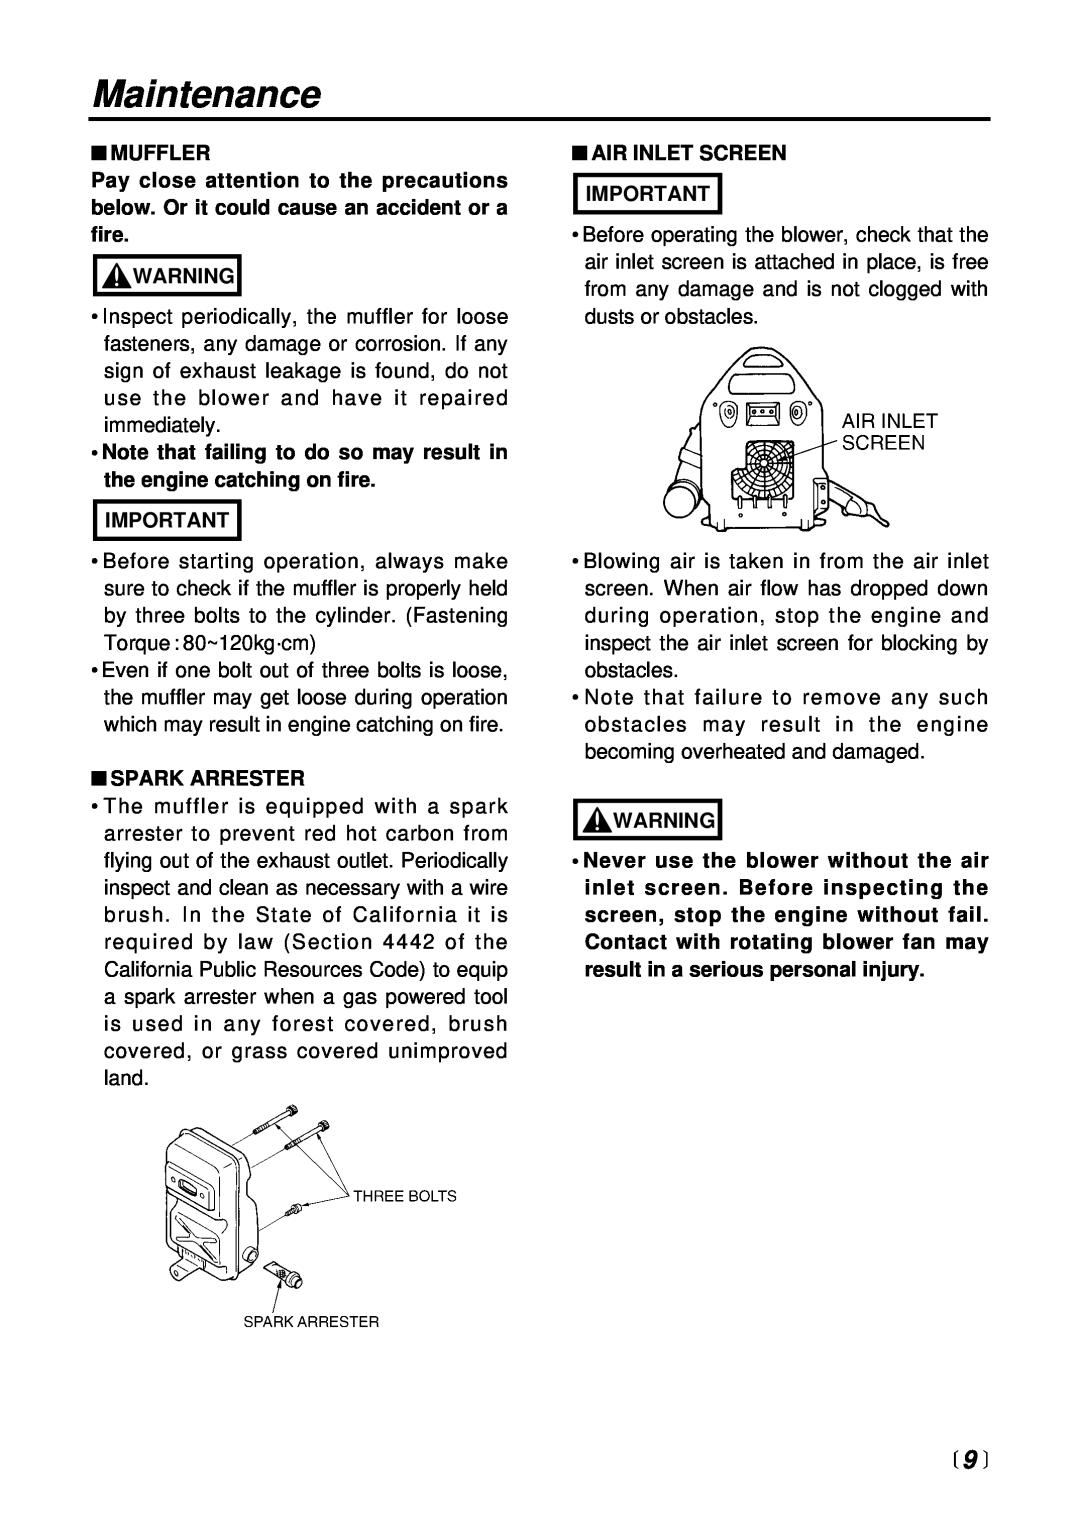 RedMax EB6200 manual Maintenance, 9 , Muffler, Spark Arrester, Air Inlet Screen Important 